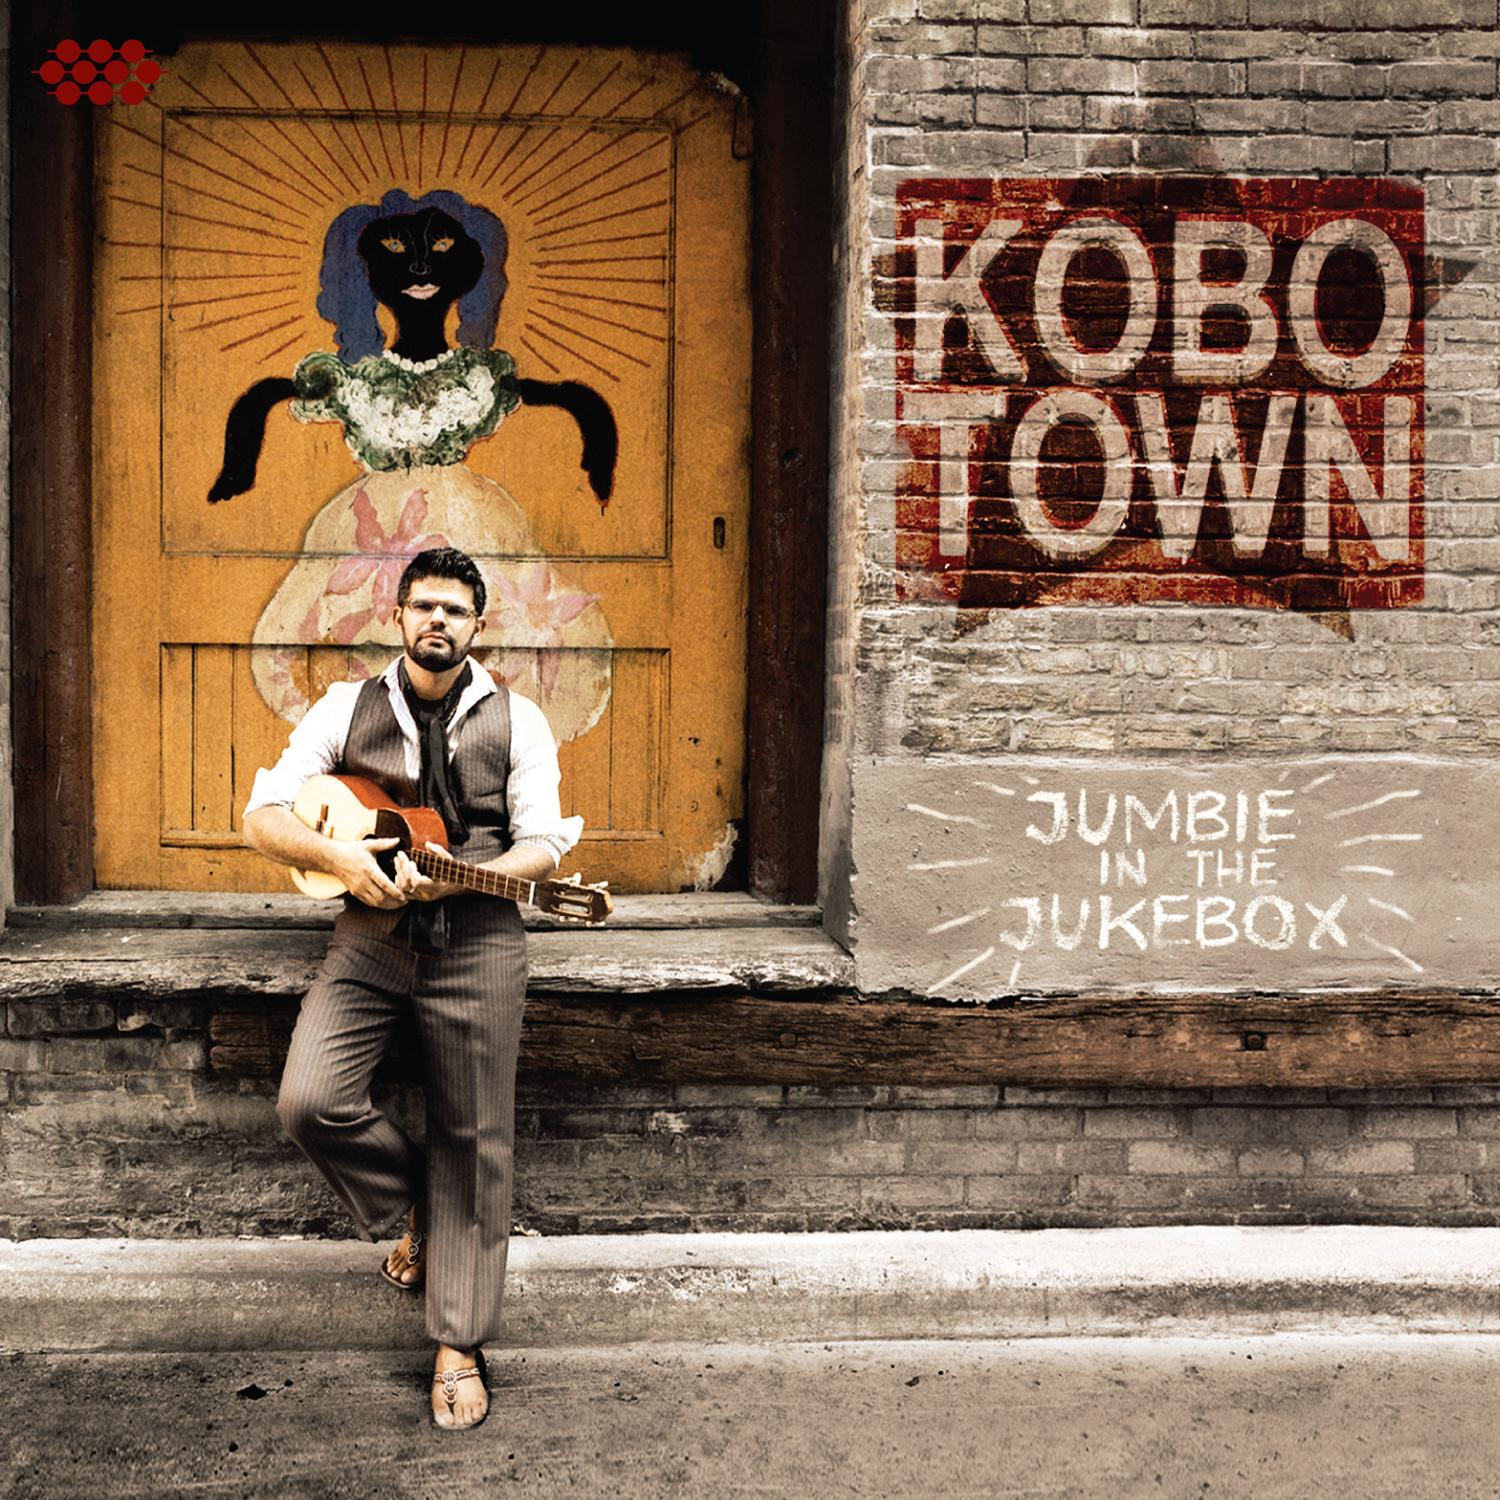 Kobo Town - Jumble In The Jukebox